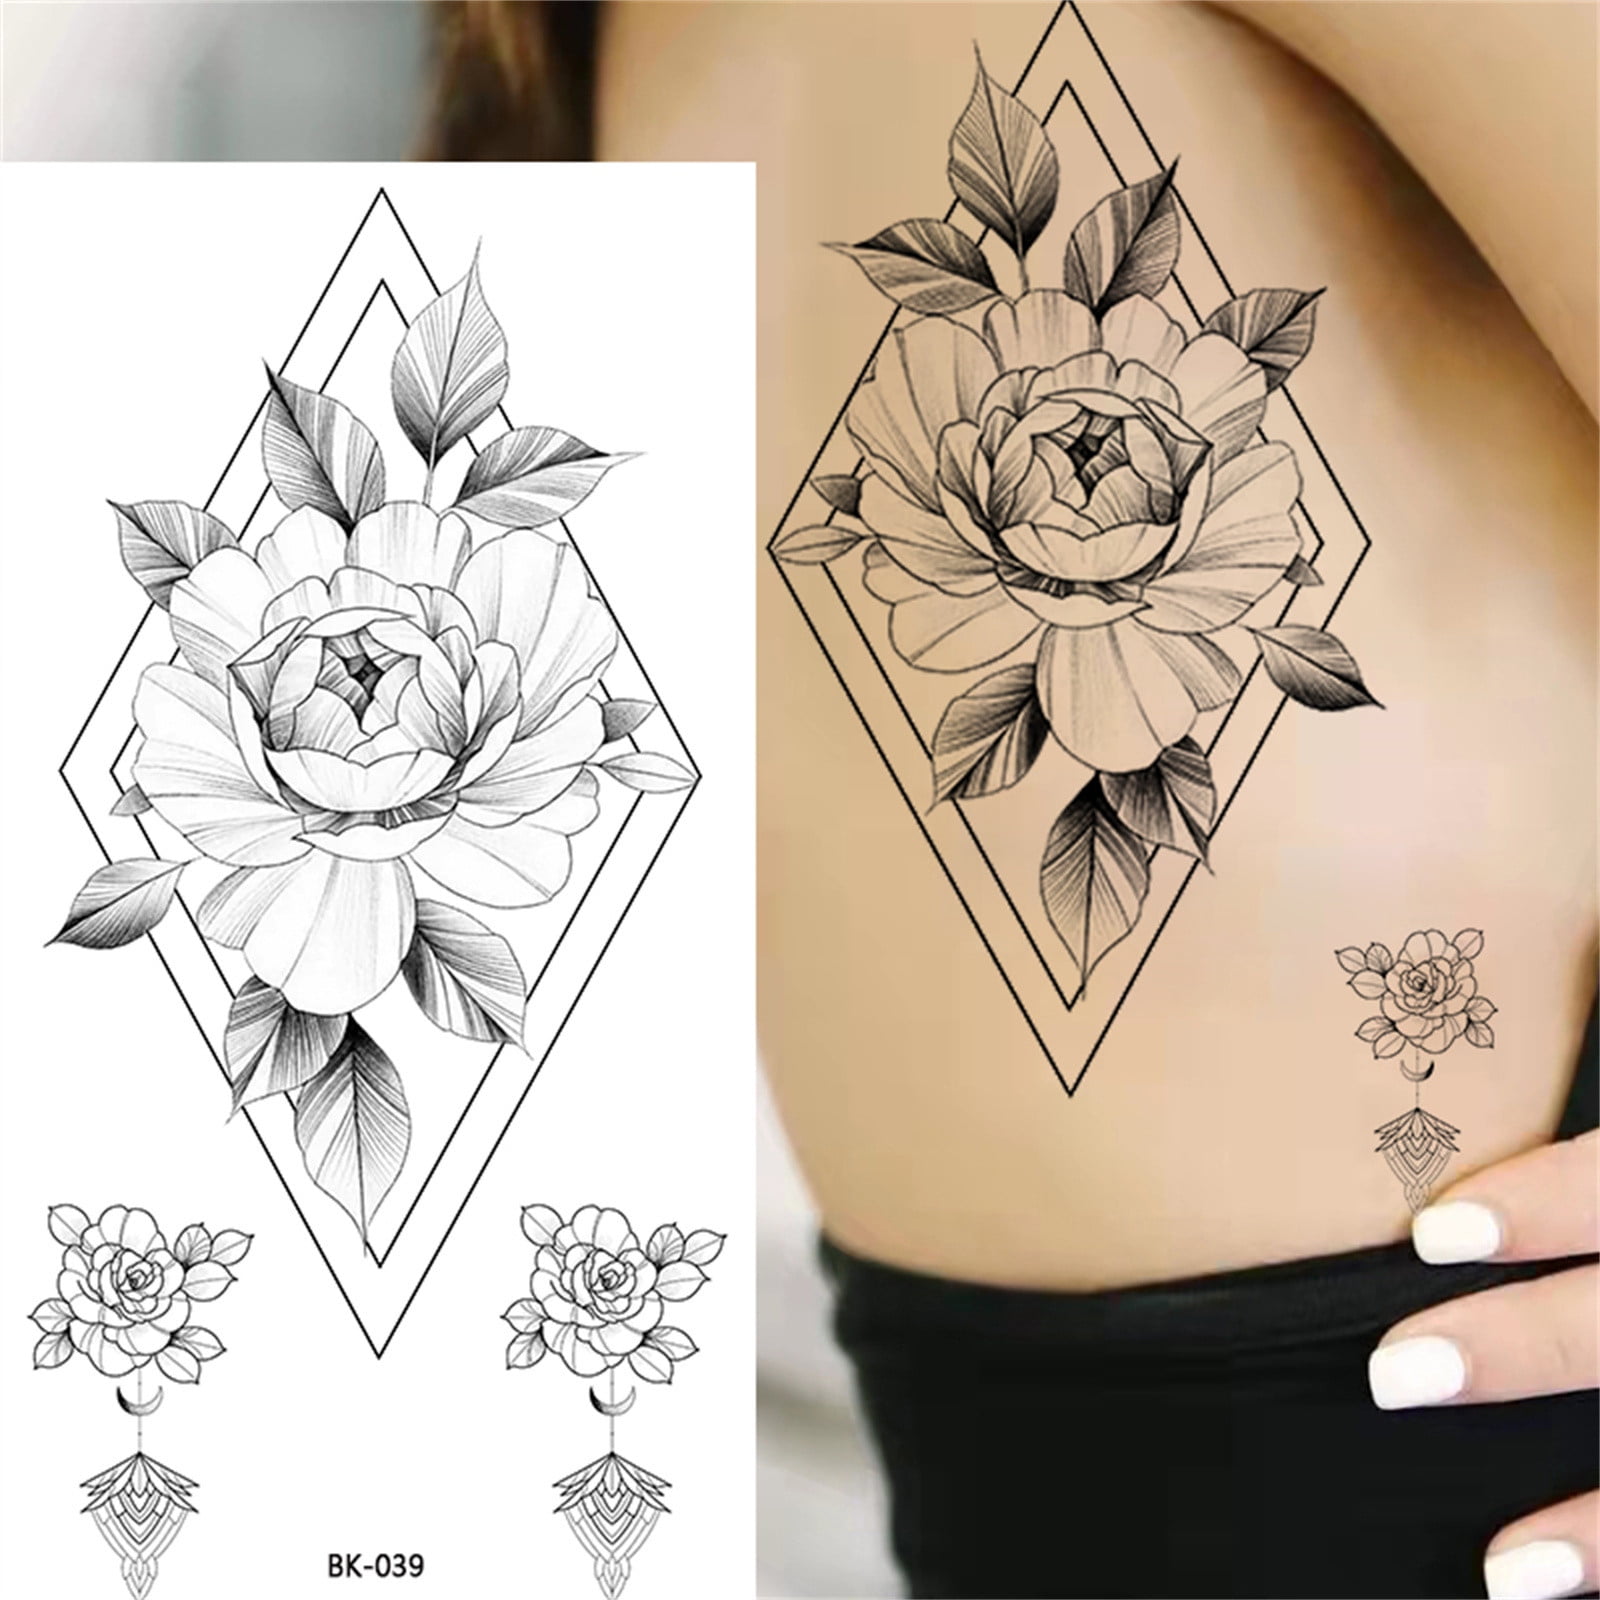 Diy Geometric Flower Temporary Tattoos Sticker Fake Jewelry Decoration  Tattoos Decal For Women Body Art Arm Tatoo For Party Show  Temporary  Tattoos  AliExpress